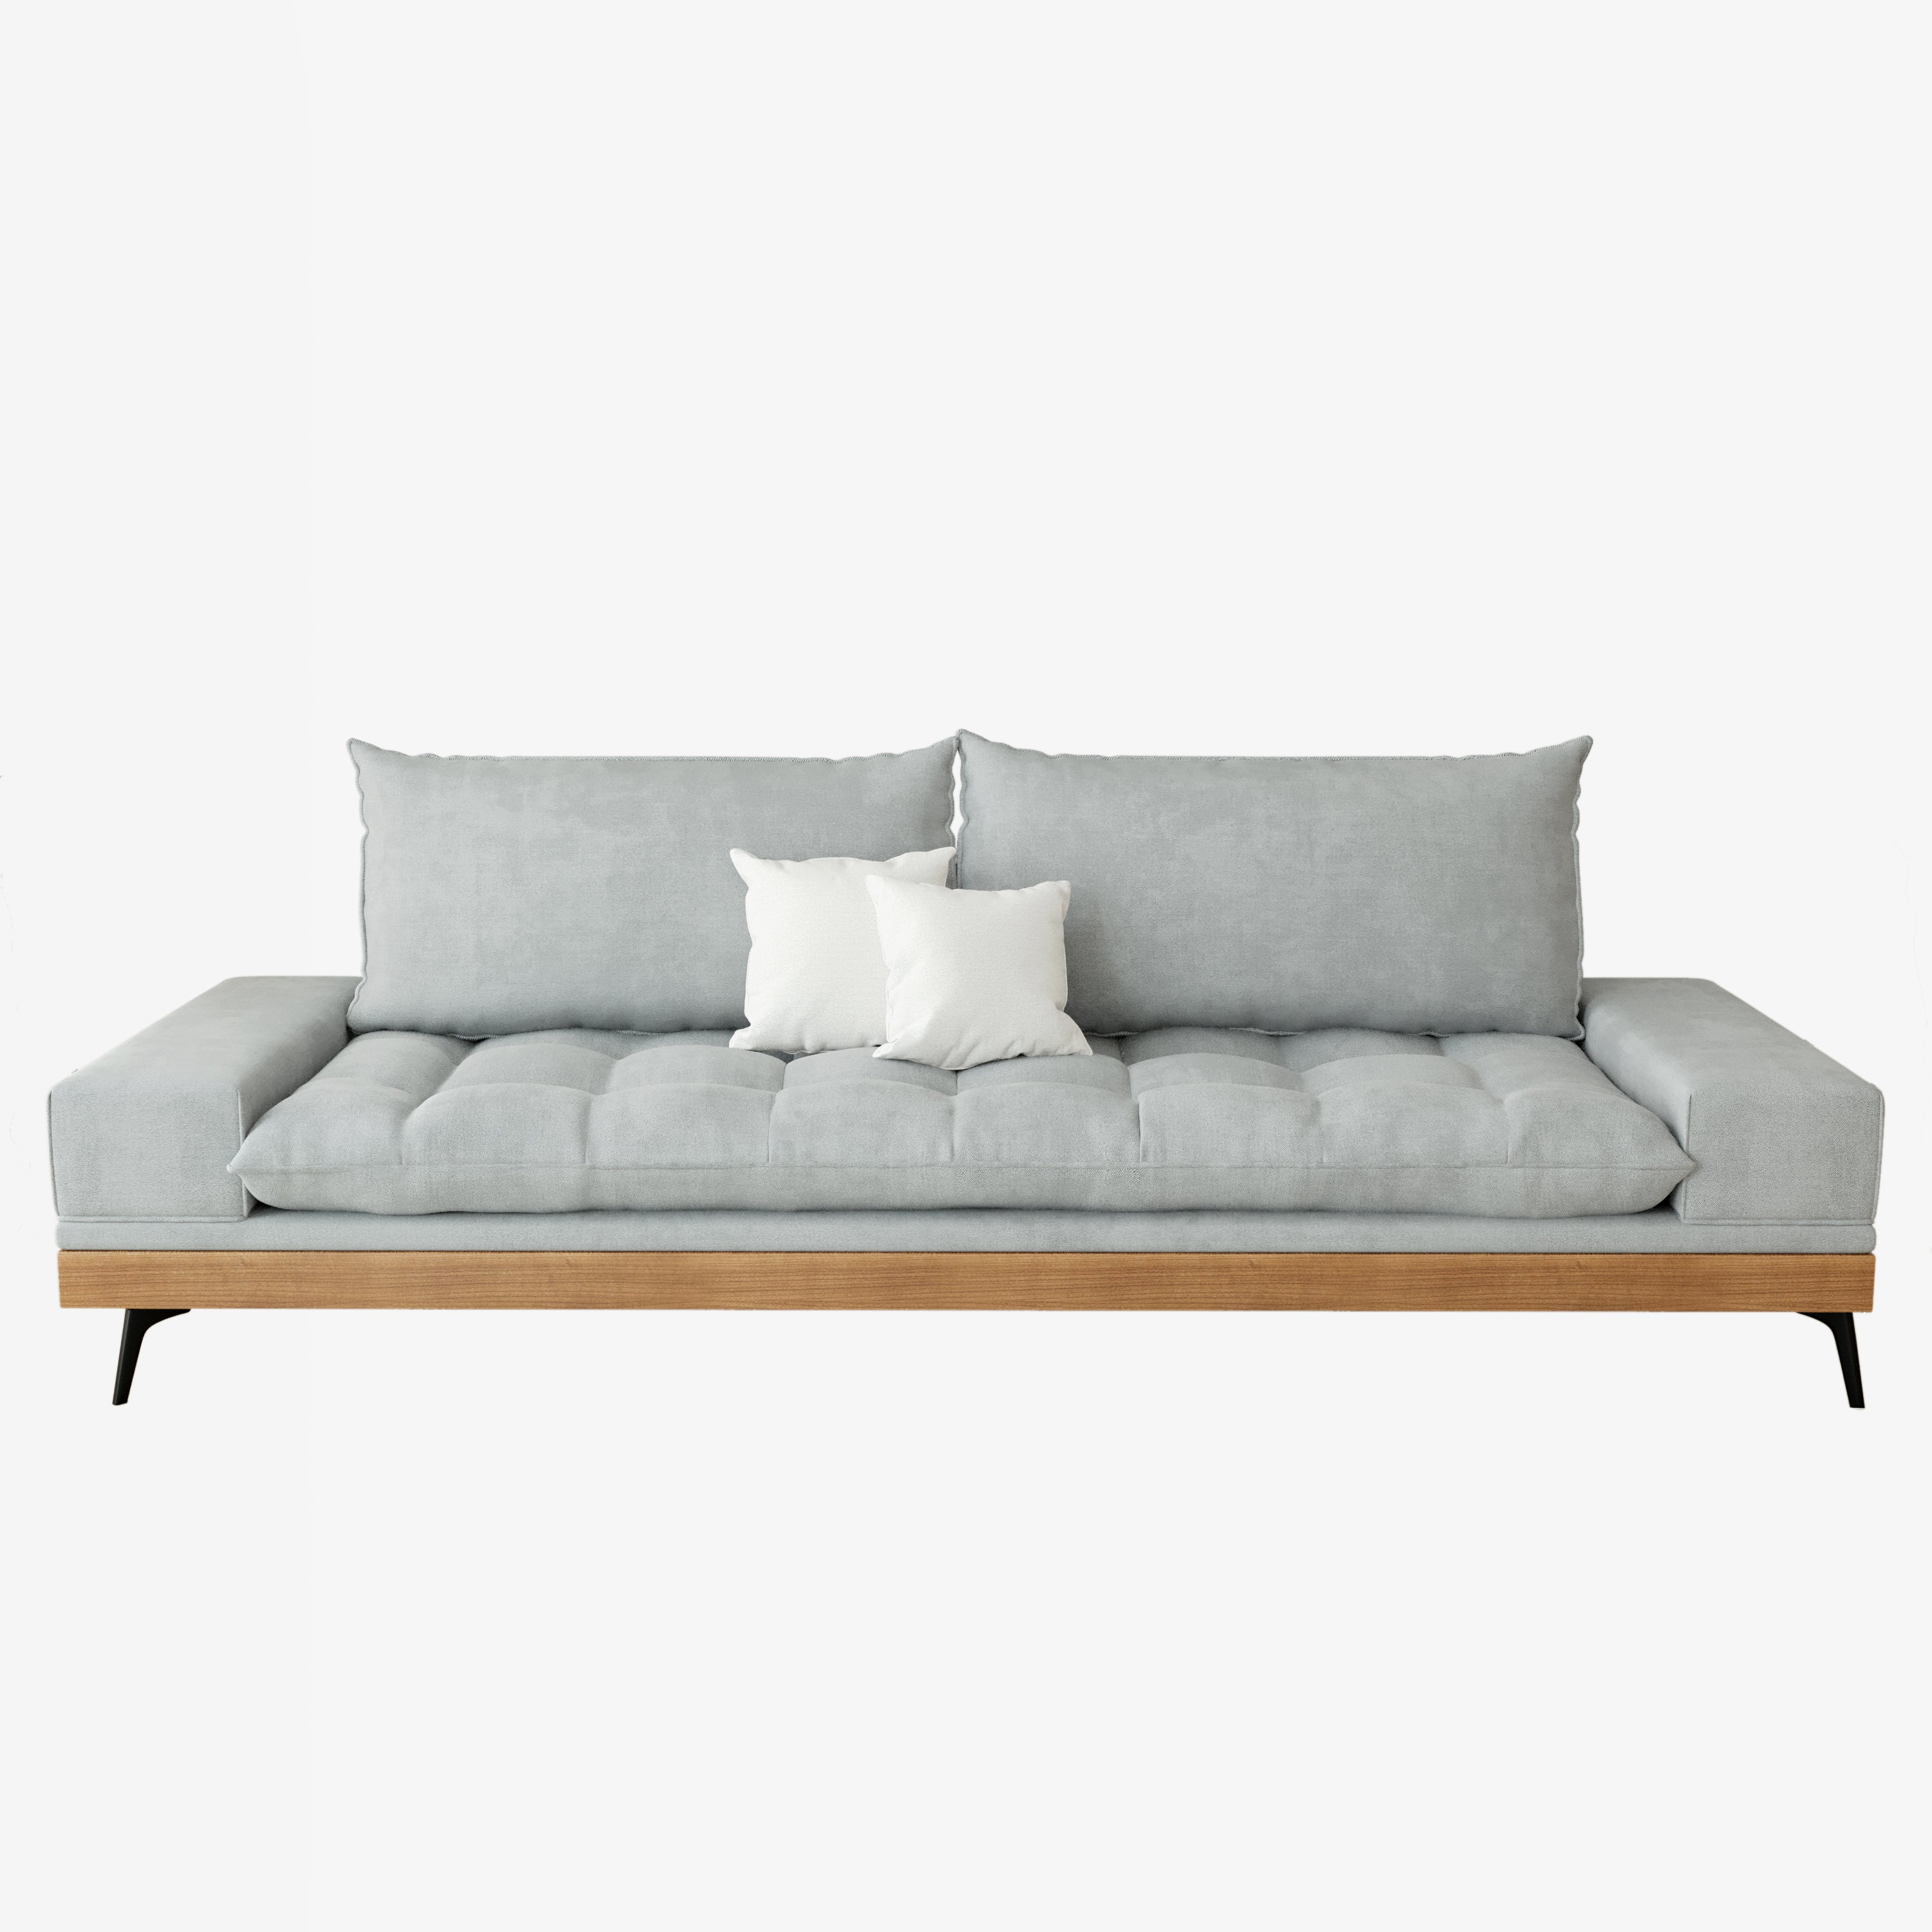 Manzanalit- ספה תלת מושבית עם צוקל עץ מלא